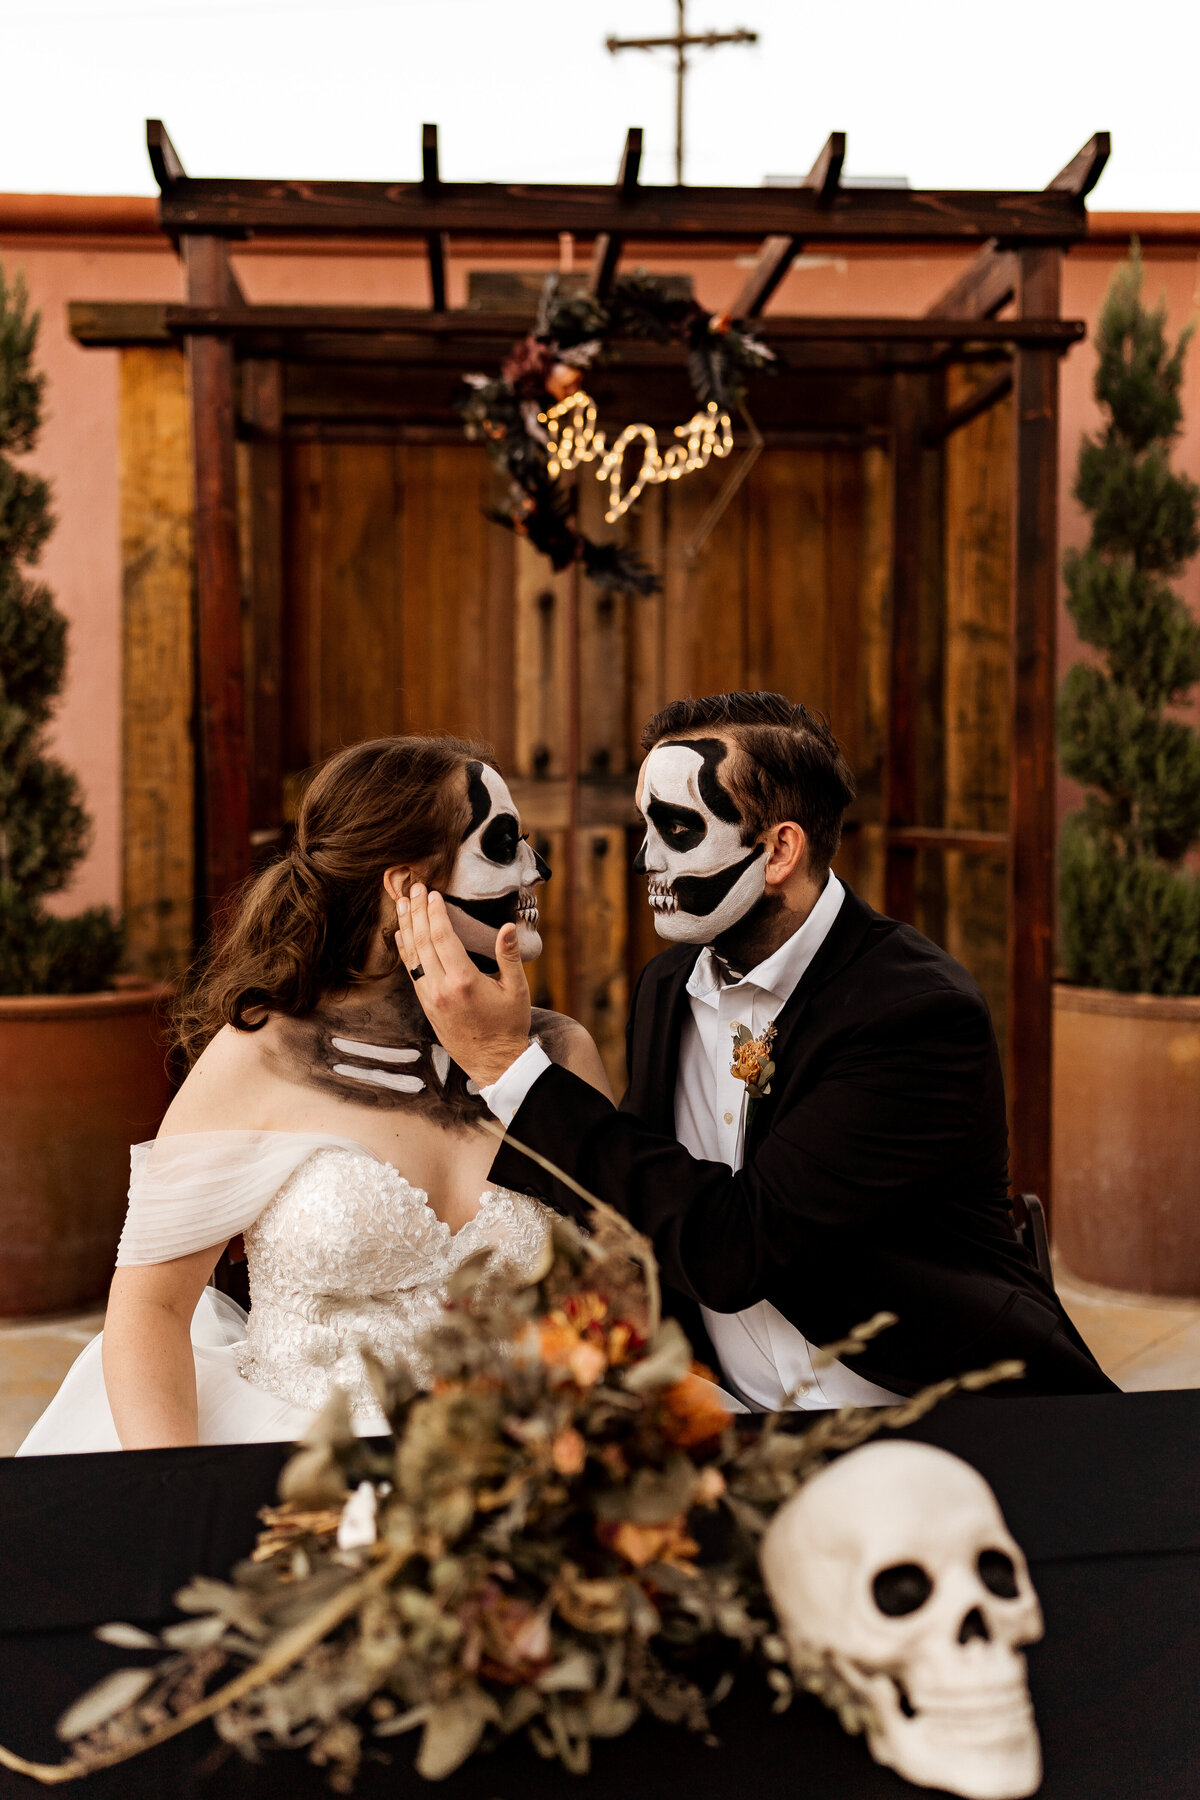 bates mansion tucson arizona halloween wedding photos (3)